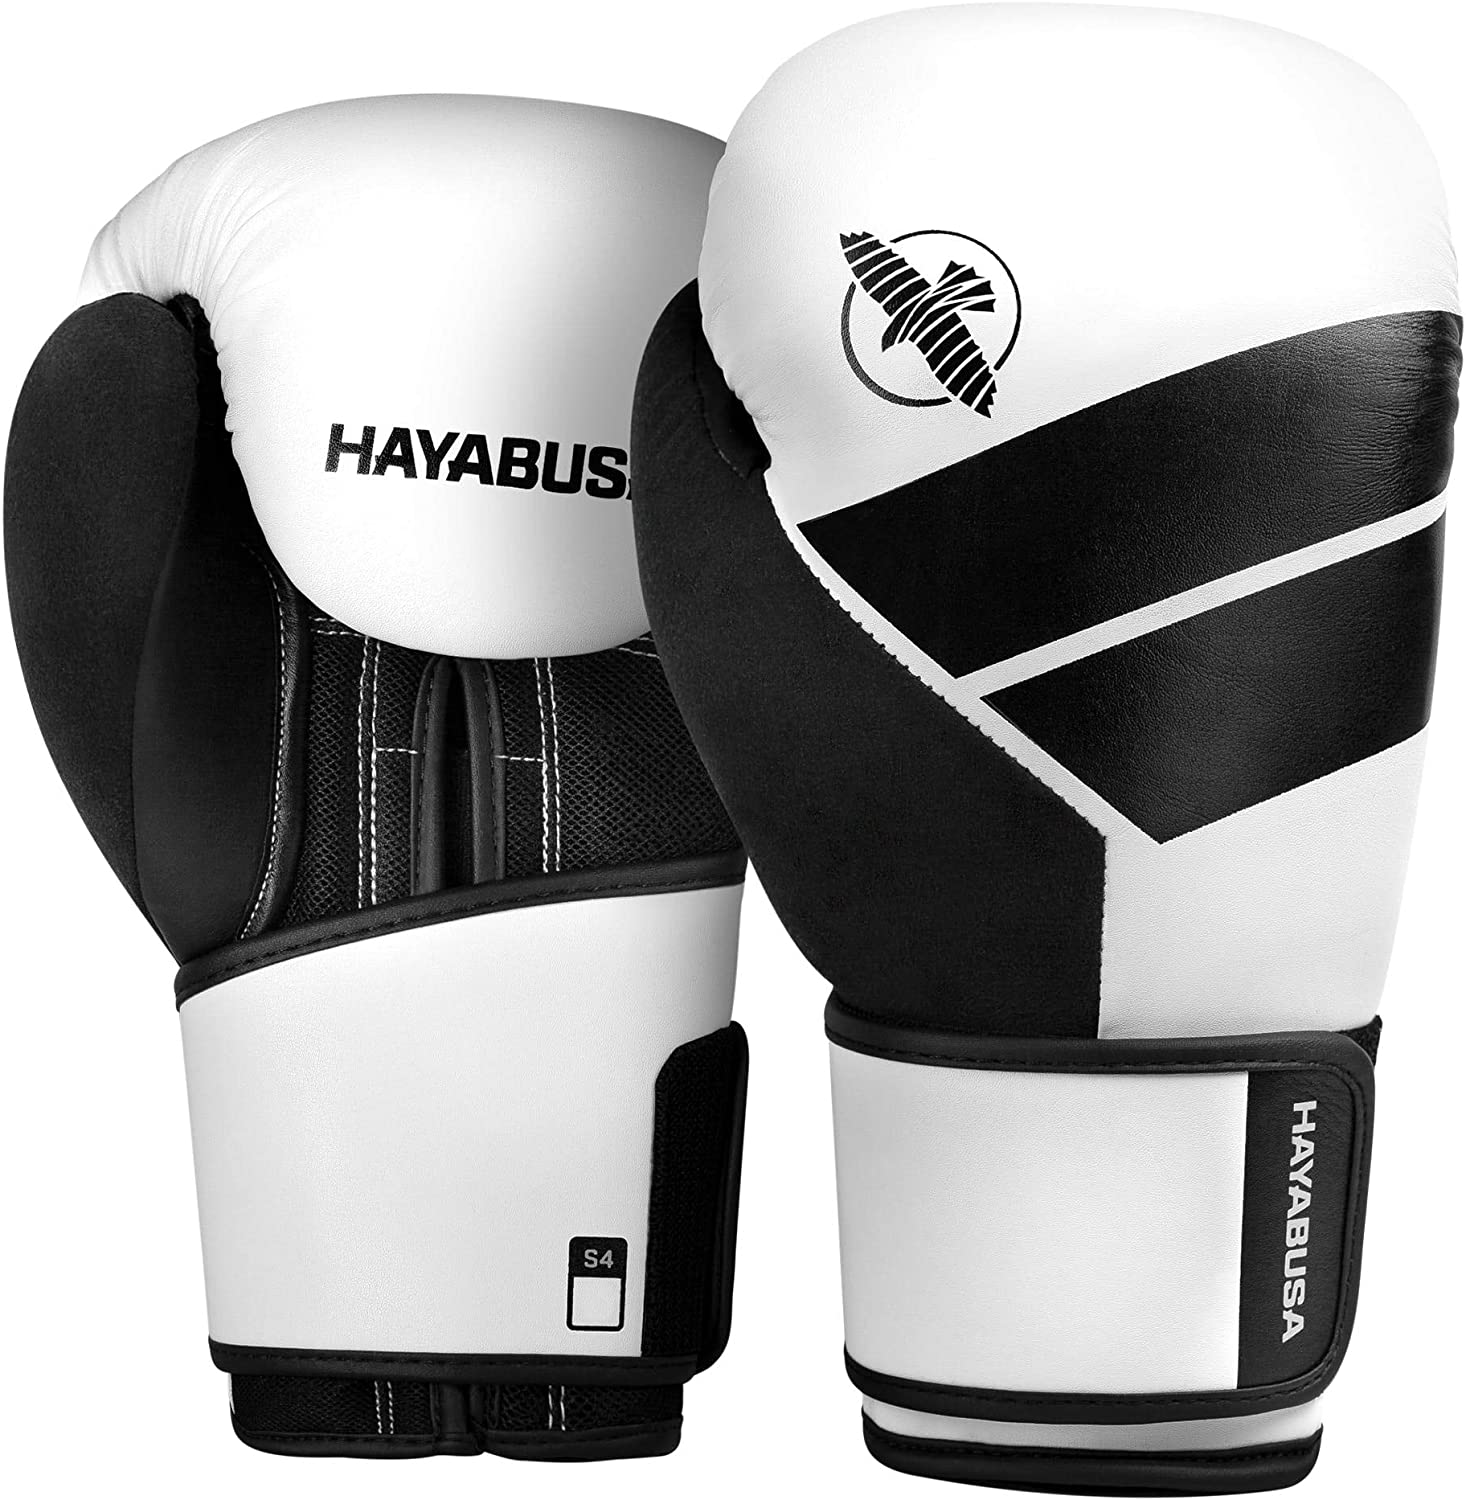 Hayabusa S4 Boxing Glove (White)